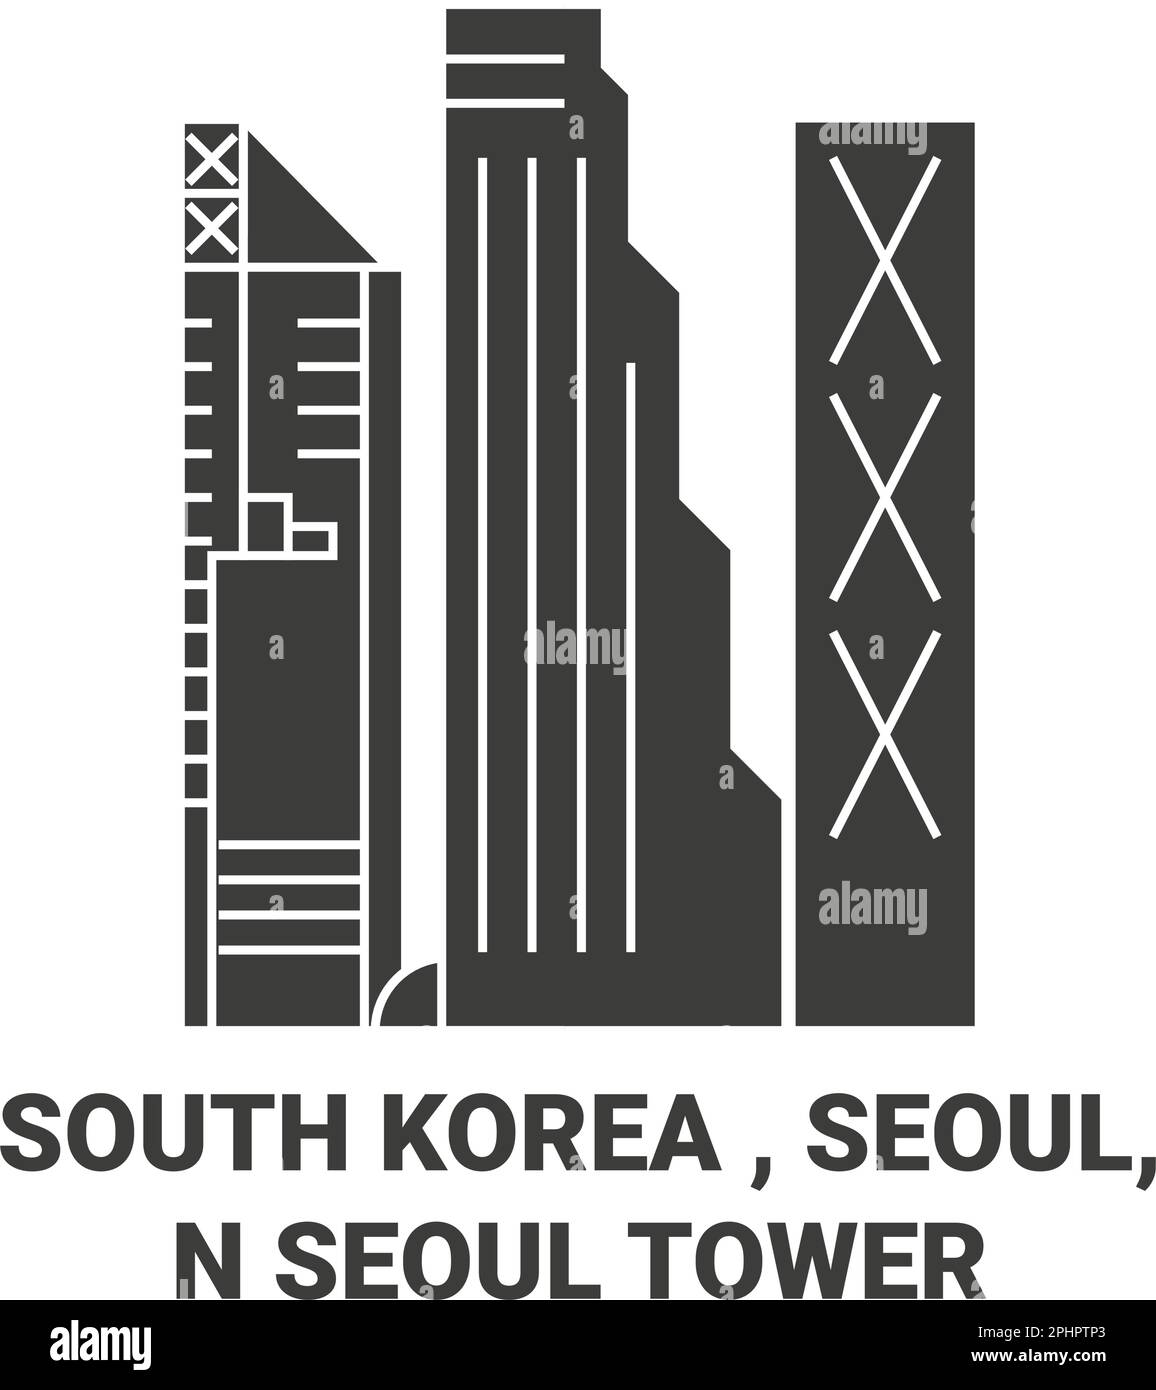 Republic Of Korea, Seoul City travel landmark vector illustration Stock Vector